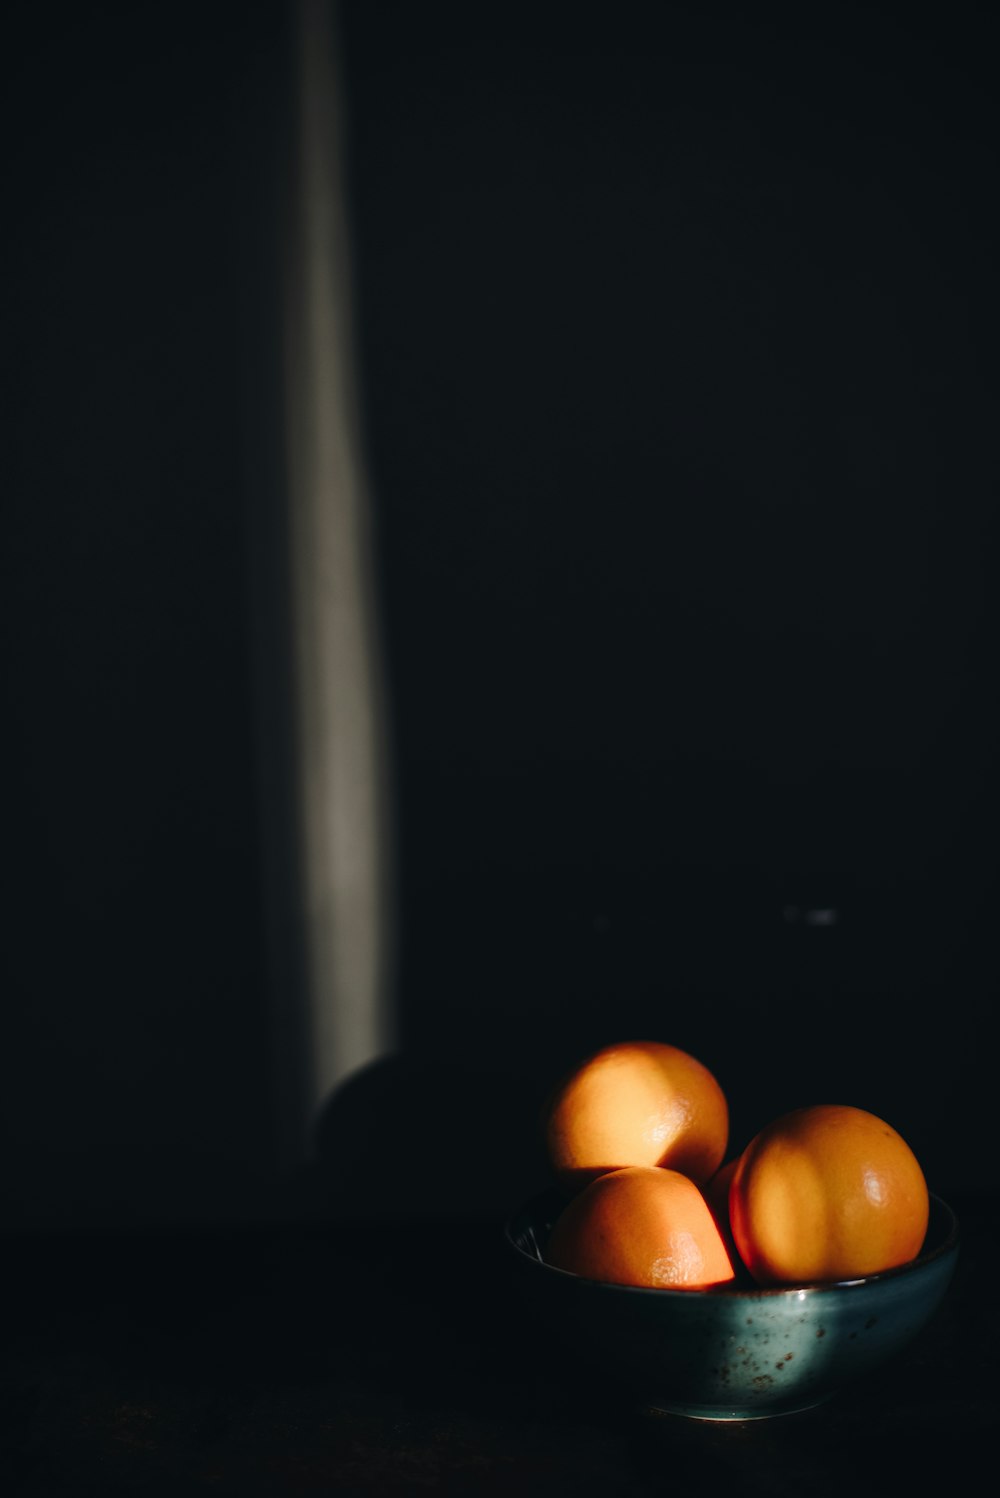 tre agrumi arancioni con ciotola